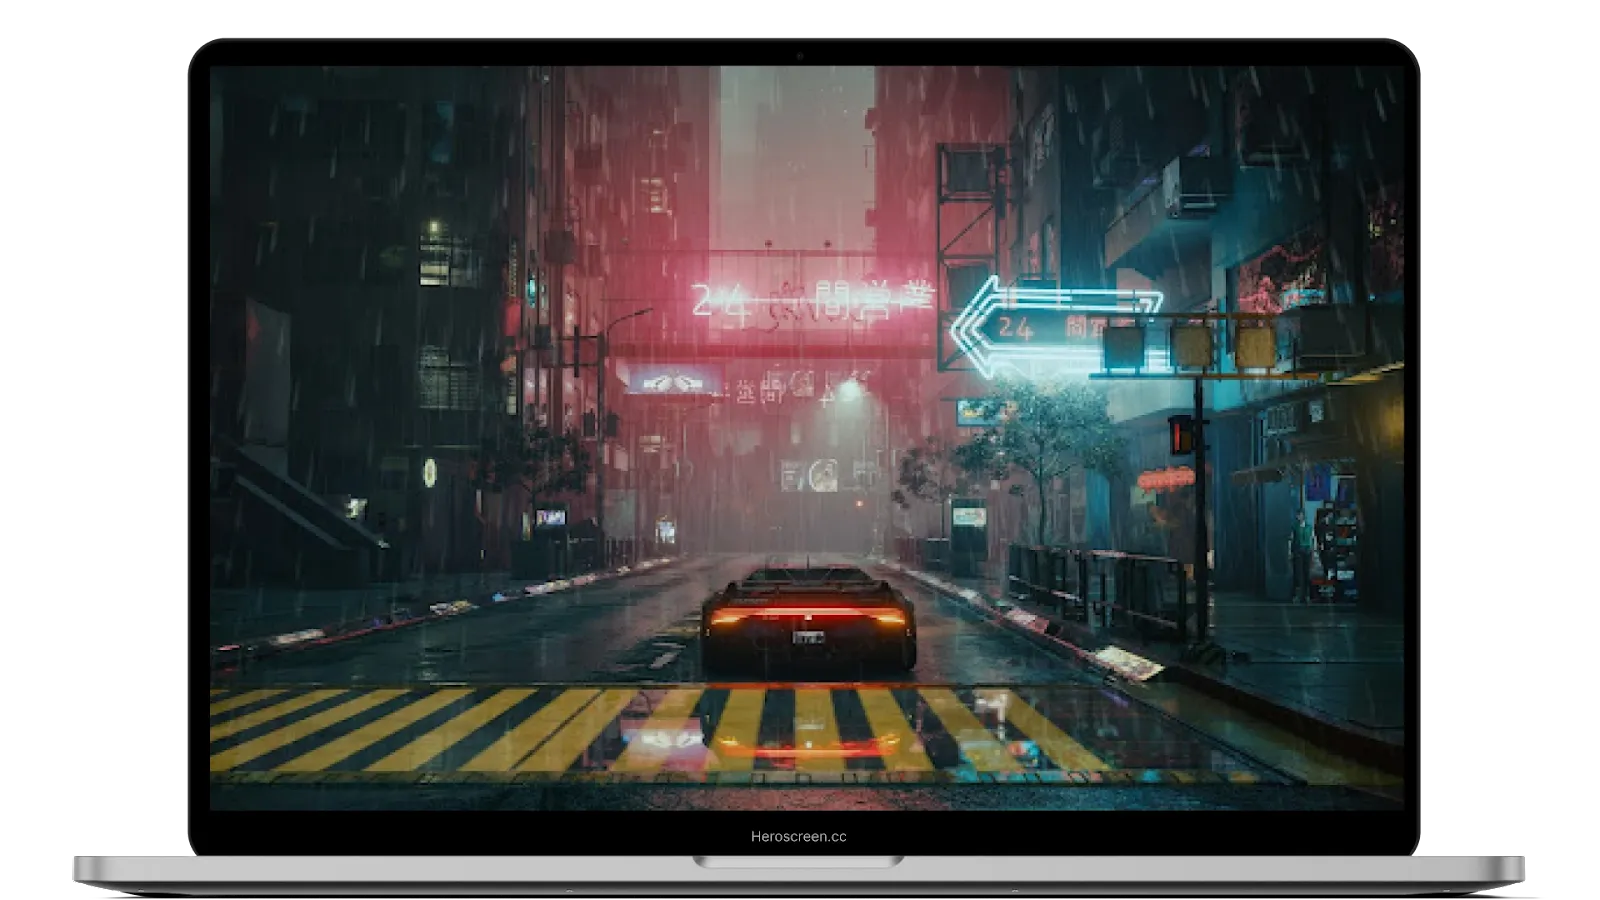 toplist Cyberpunk Car Neon Reflection 4K Wallpaper for PC